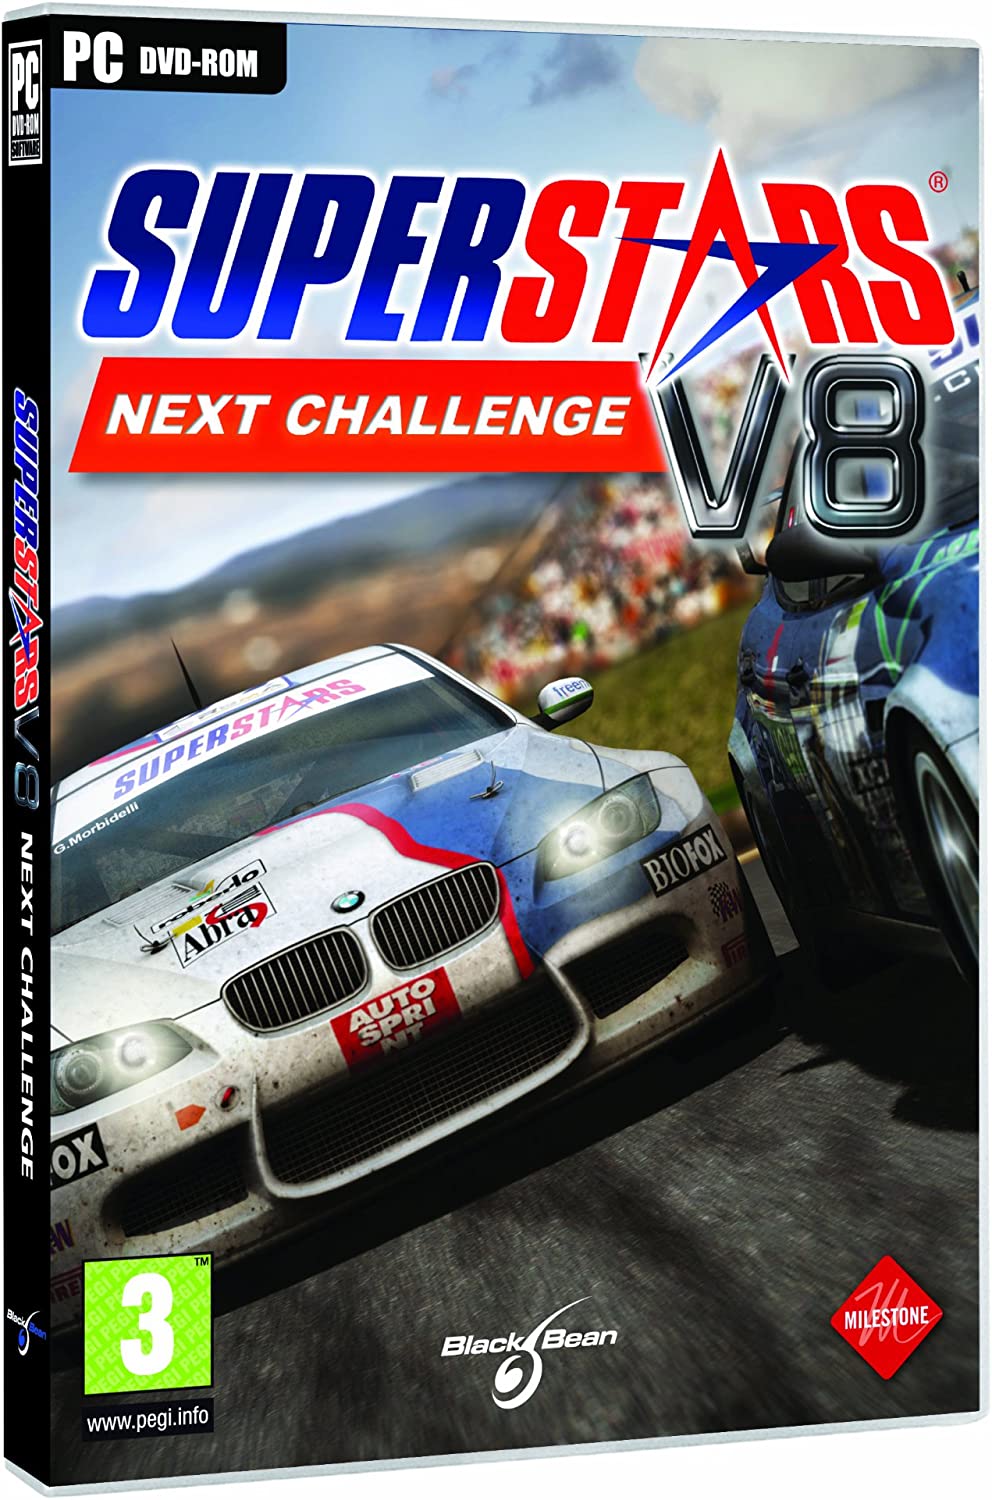 Superstar V8 Racing - Next Challenge (PC DVD)